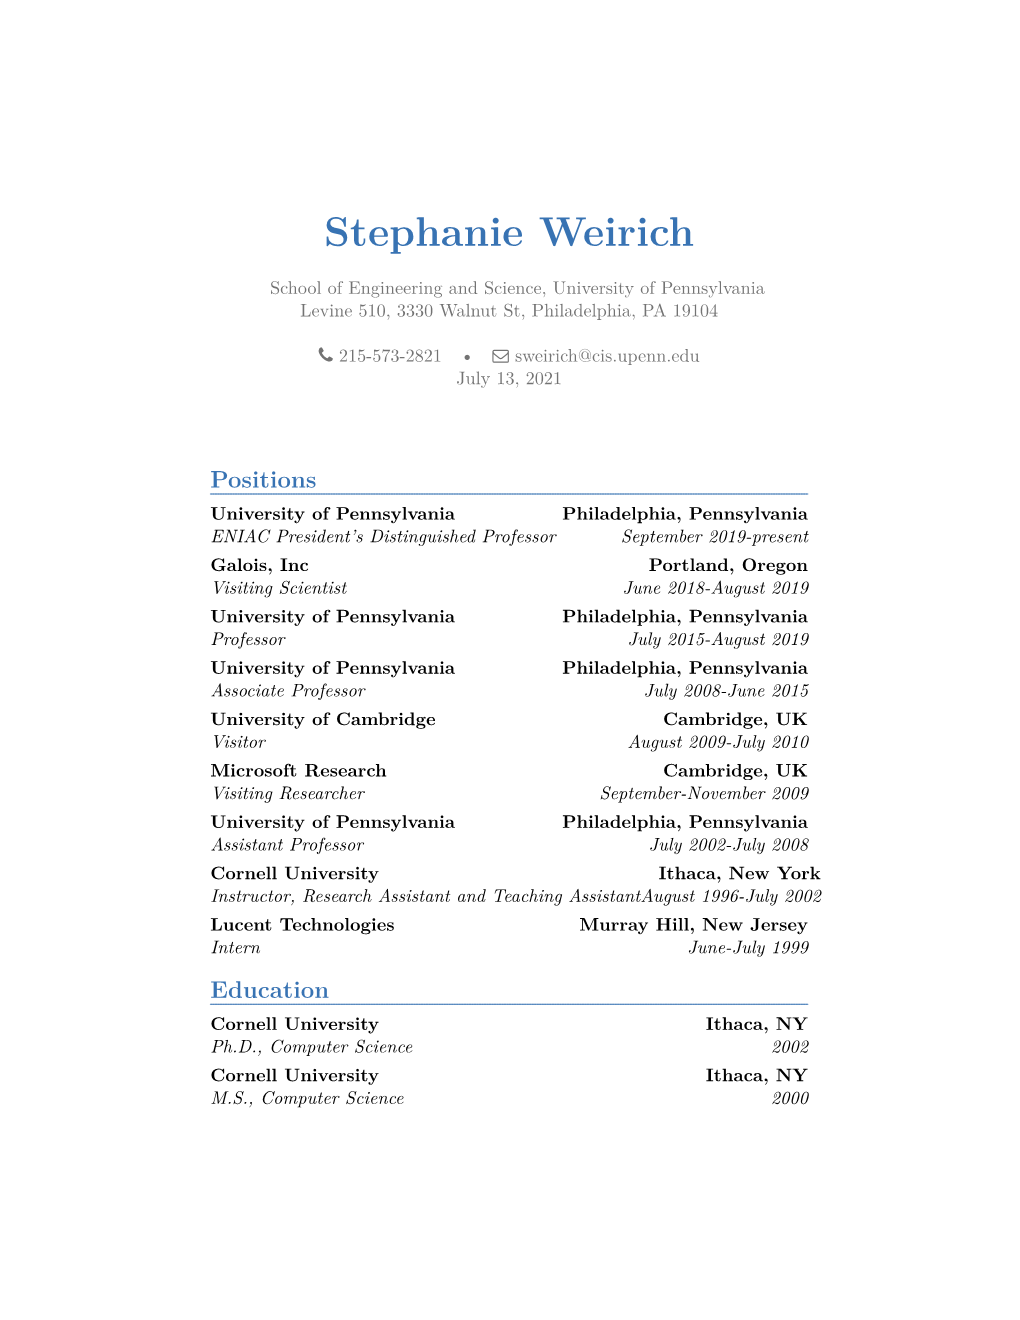 Stephanie Weirich –